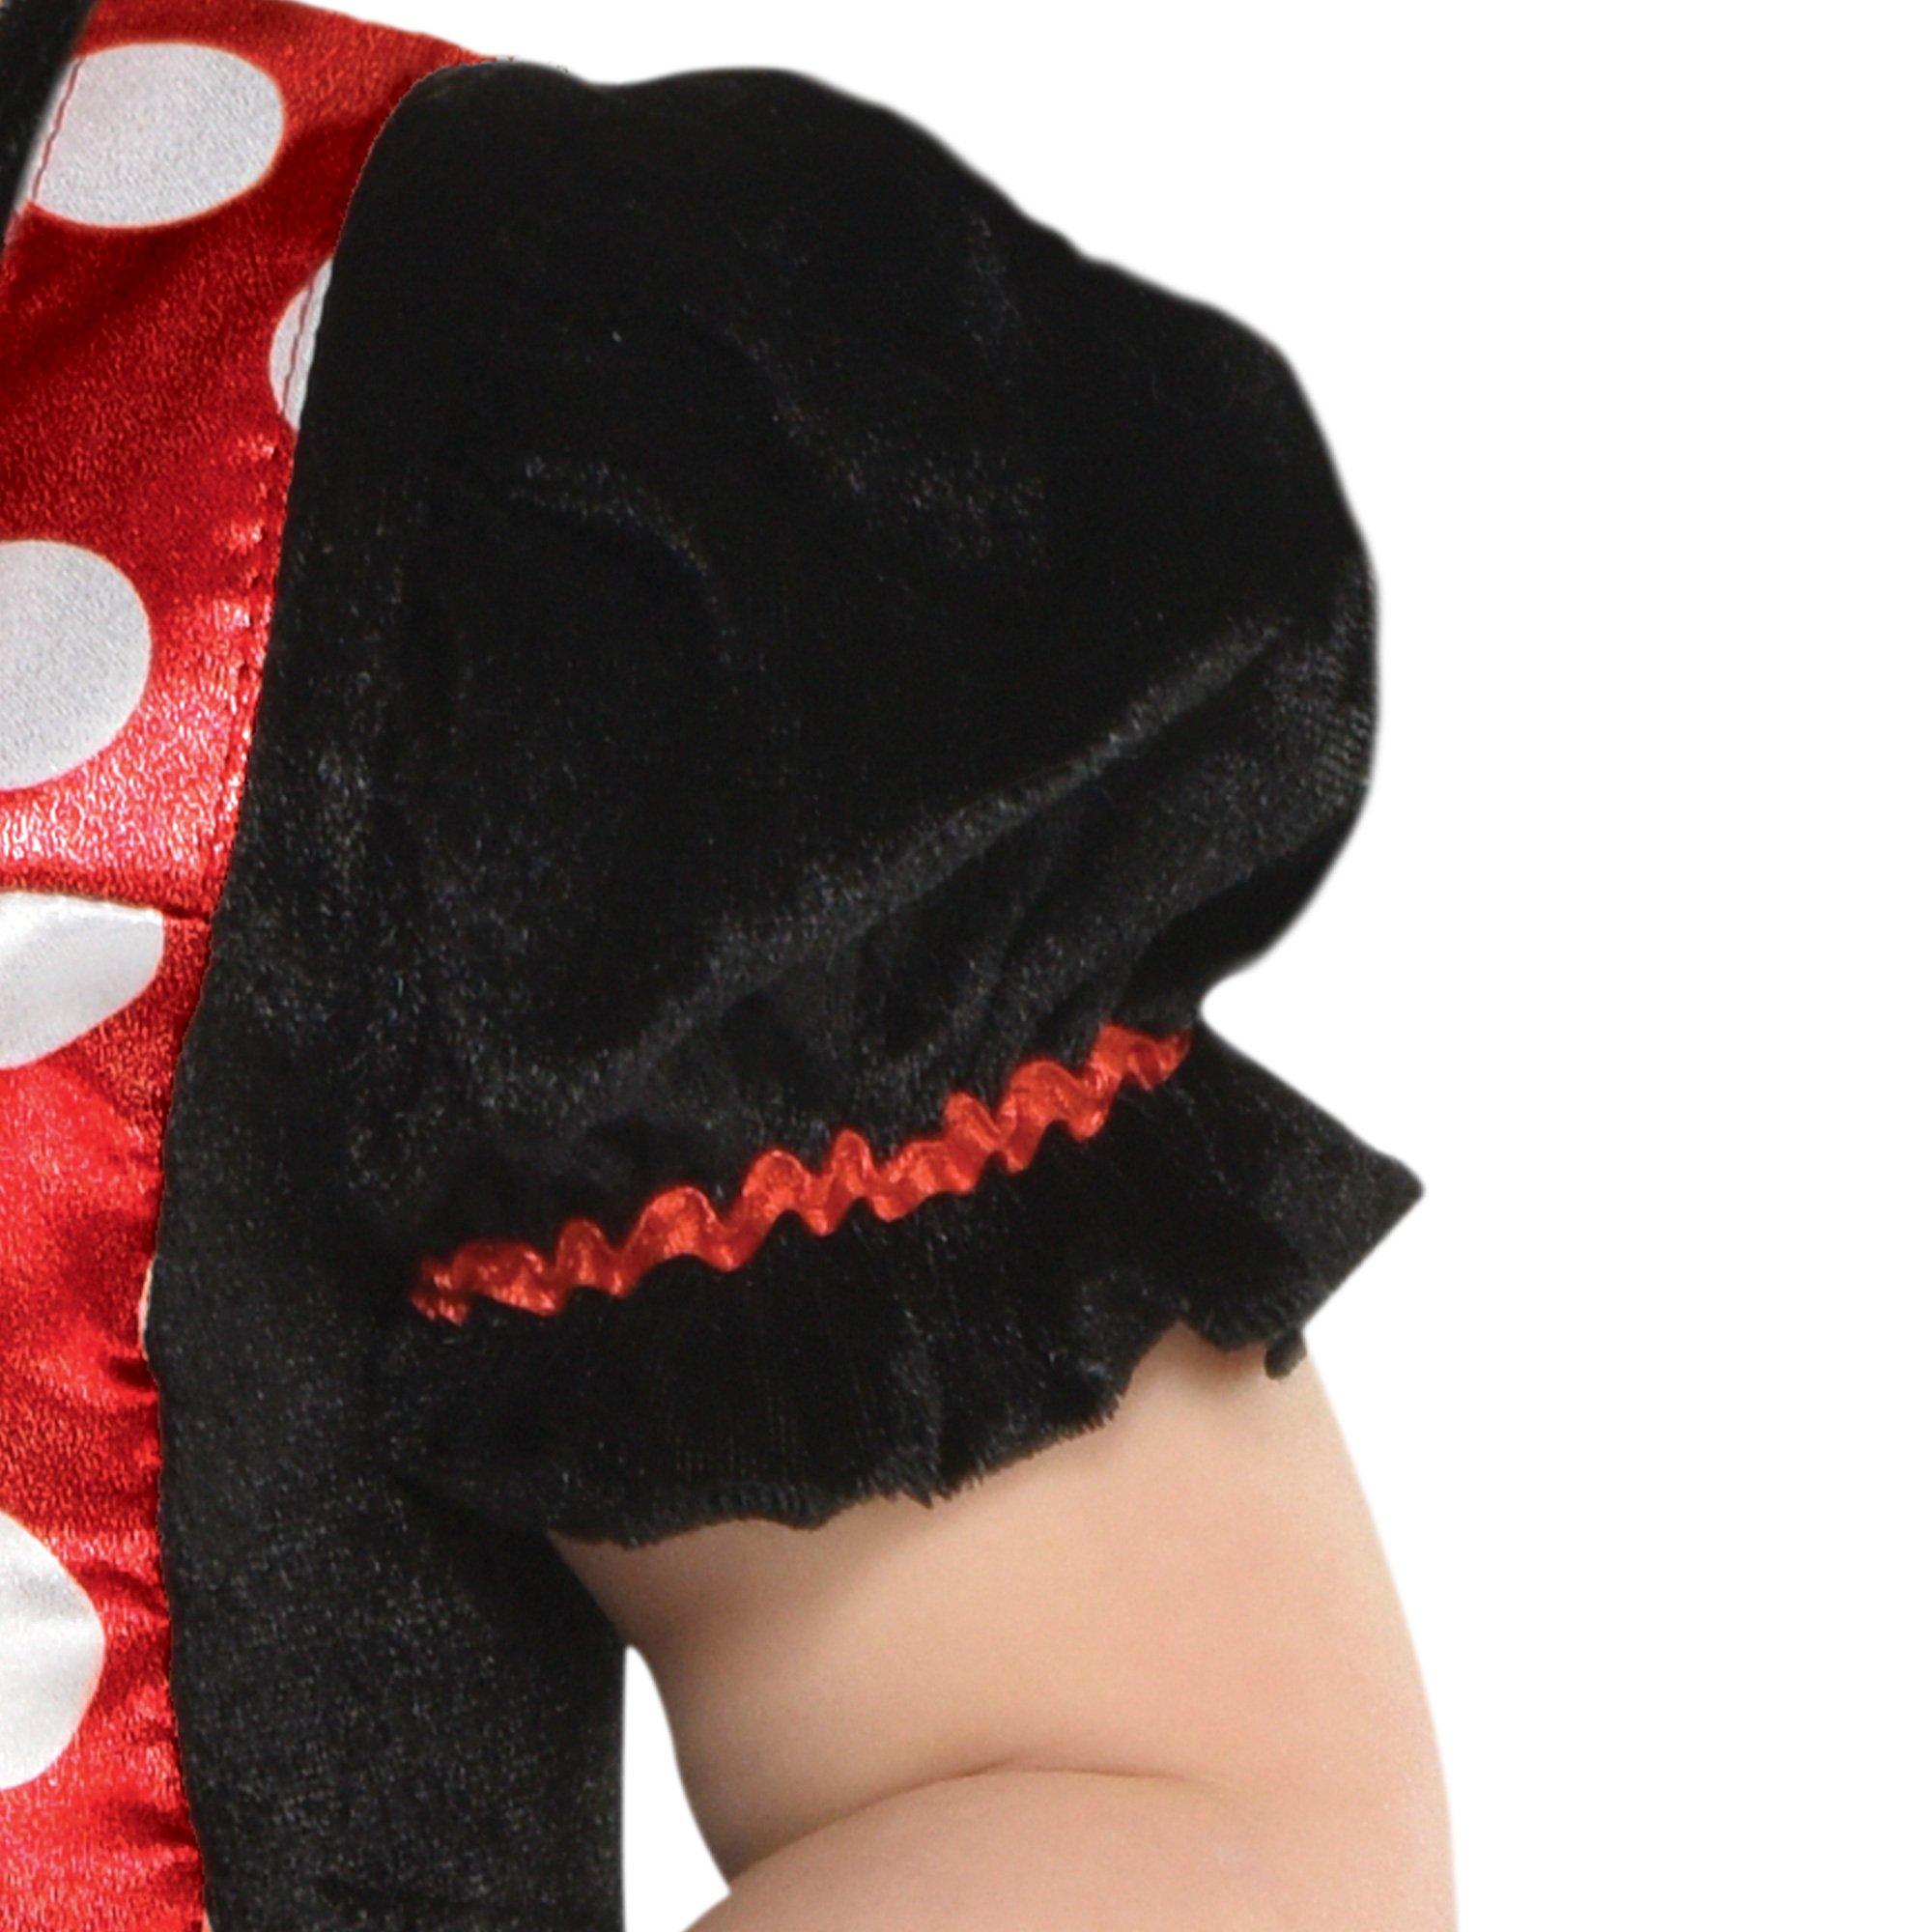 Kids' Red Polka Dot Minnie Mouse Costume - Disney